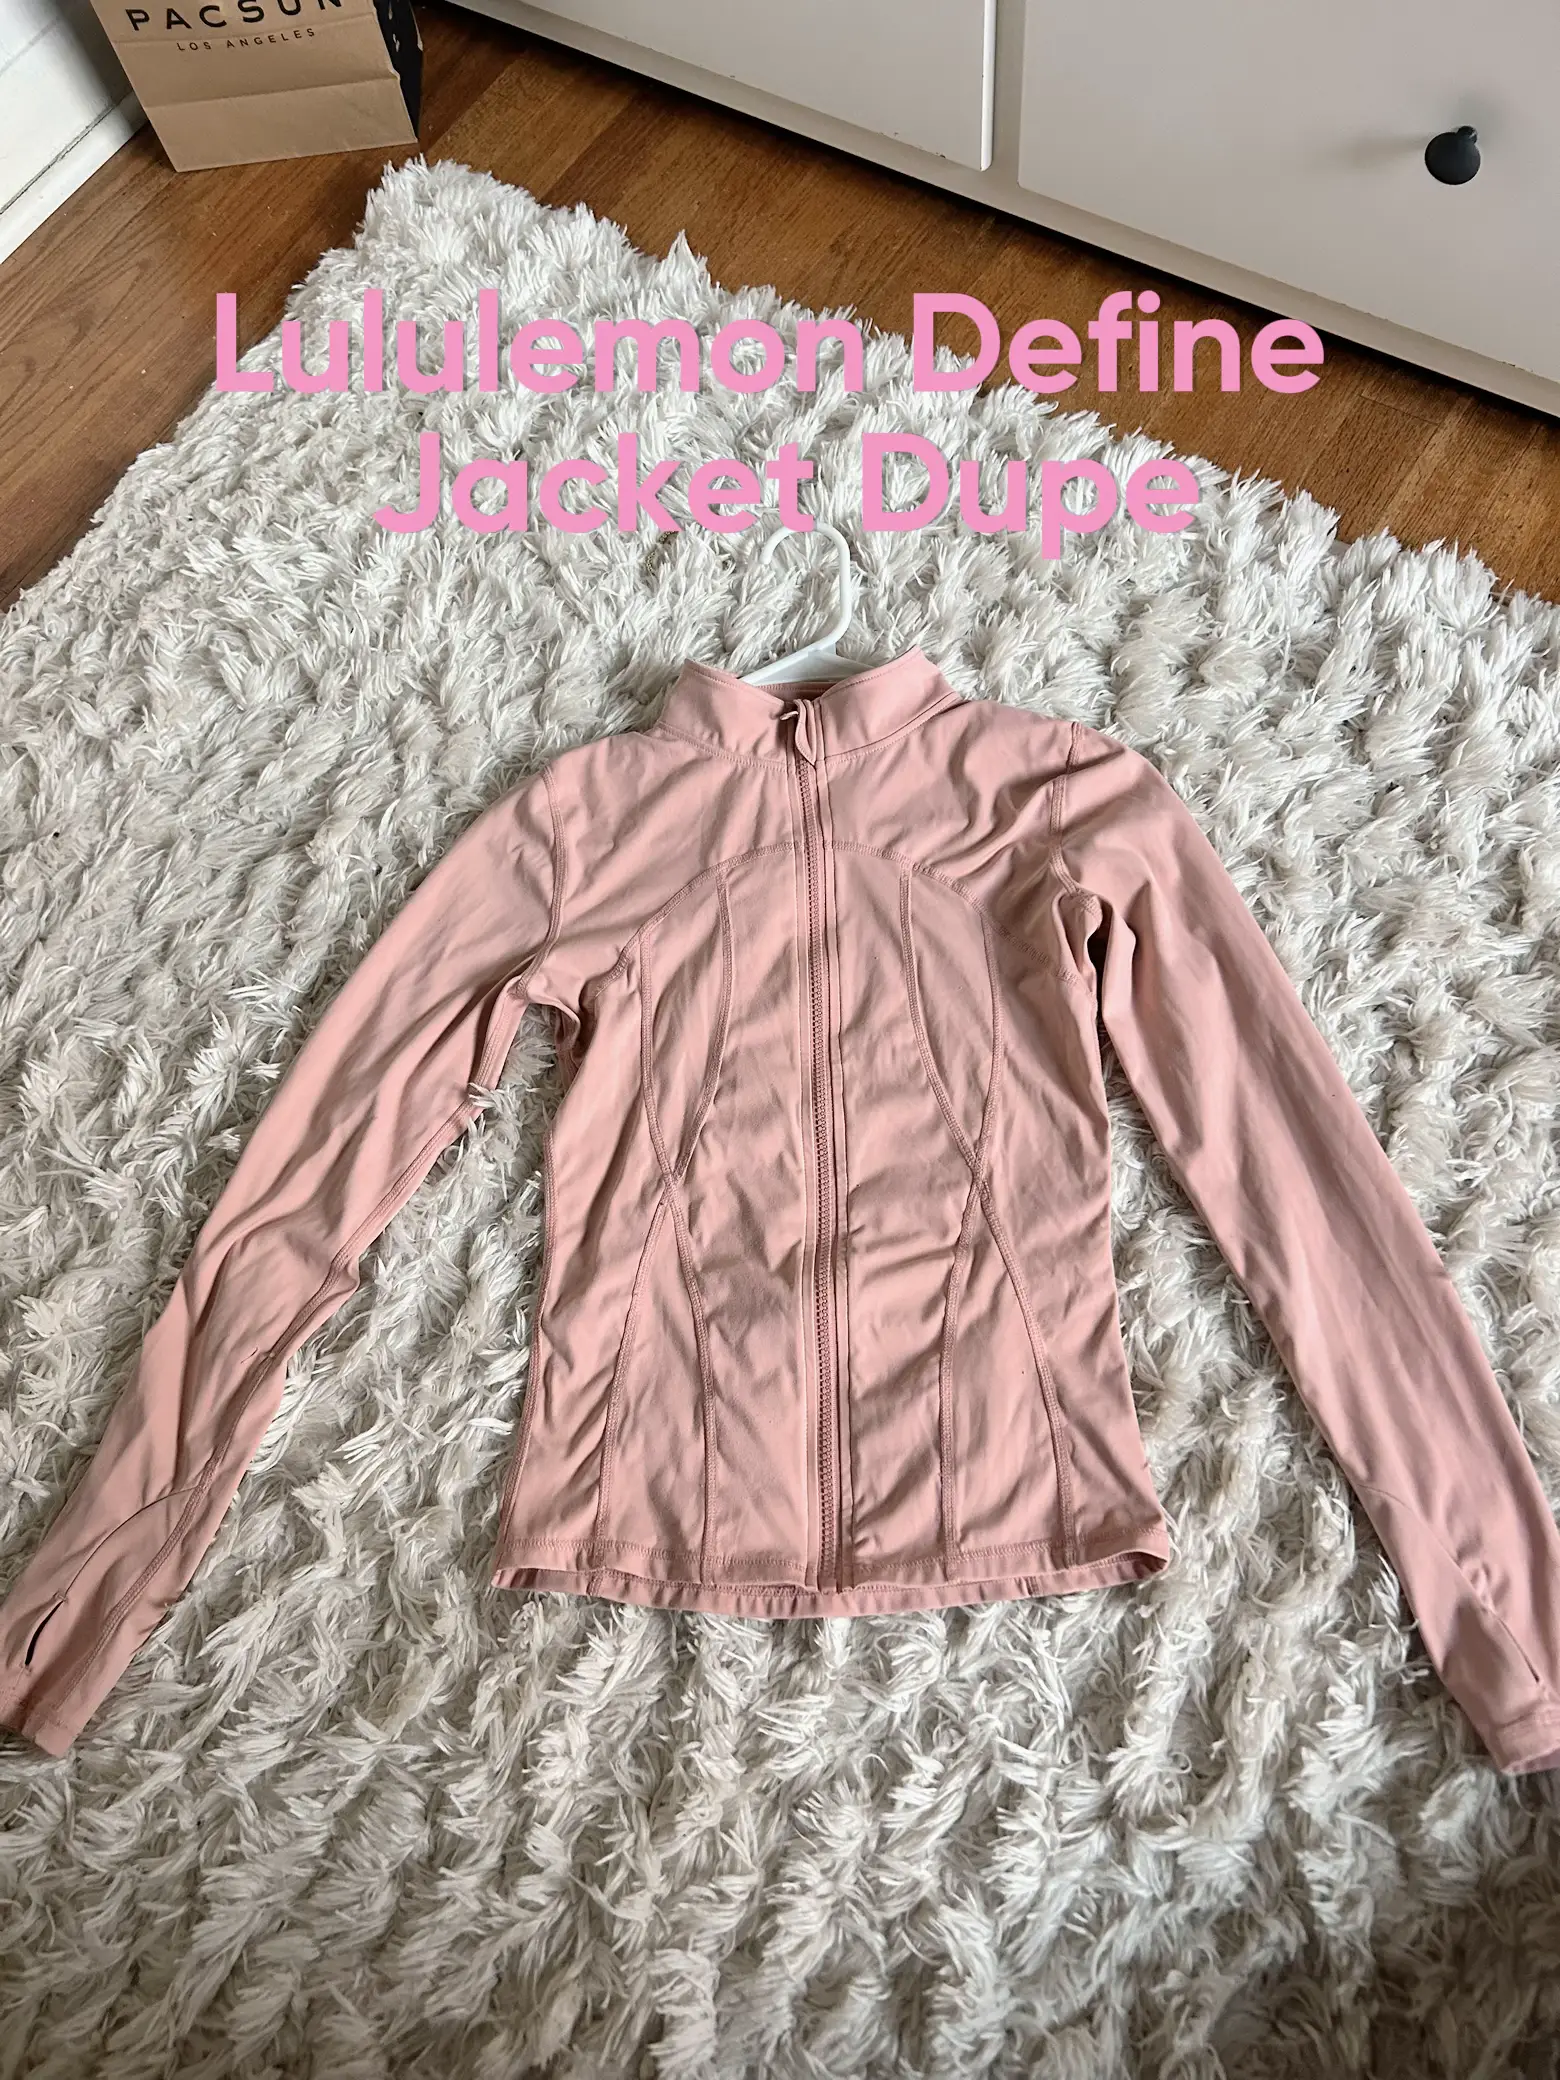 Lululemon Define Cropped Jacket Pink Size 2 - $100 (15% Off Retail) - From  Elisabeth